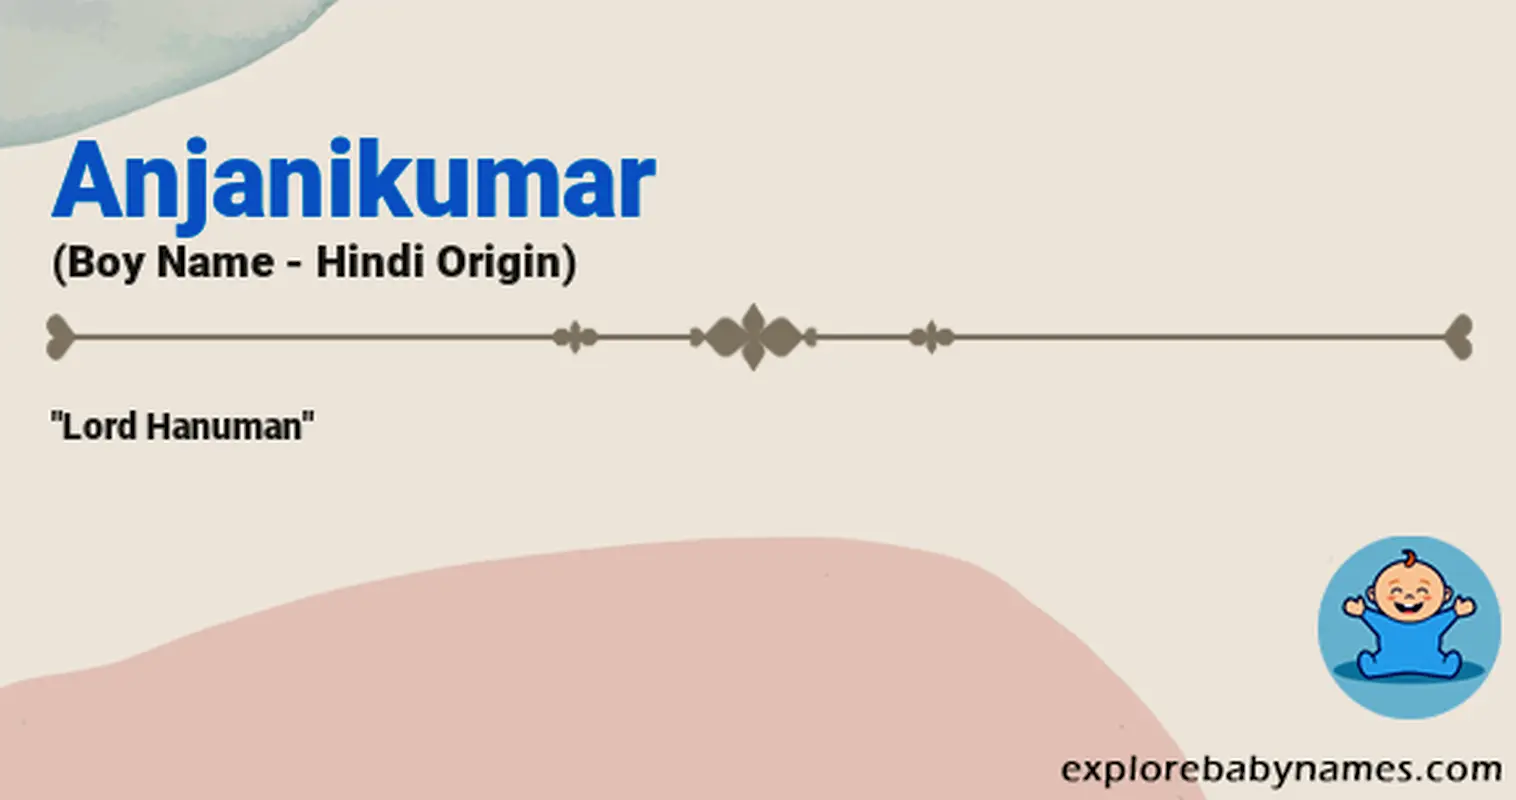 Meaning of Anjanikumar